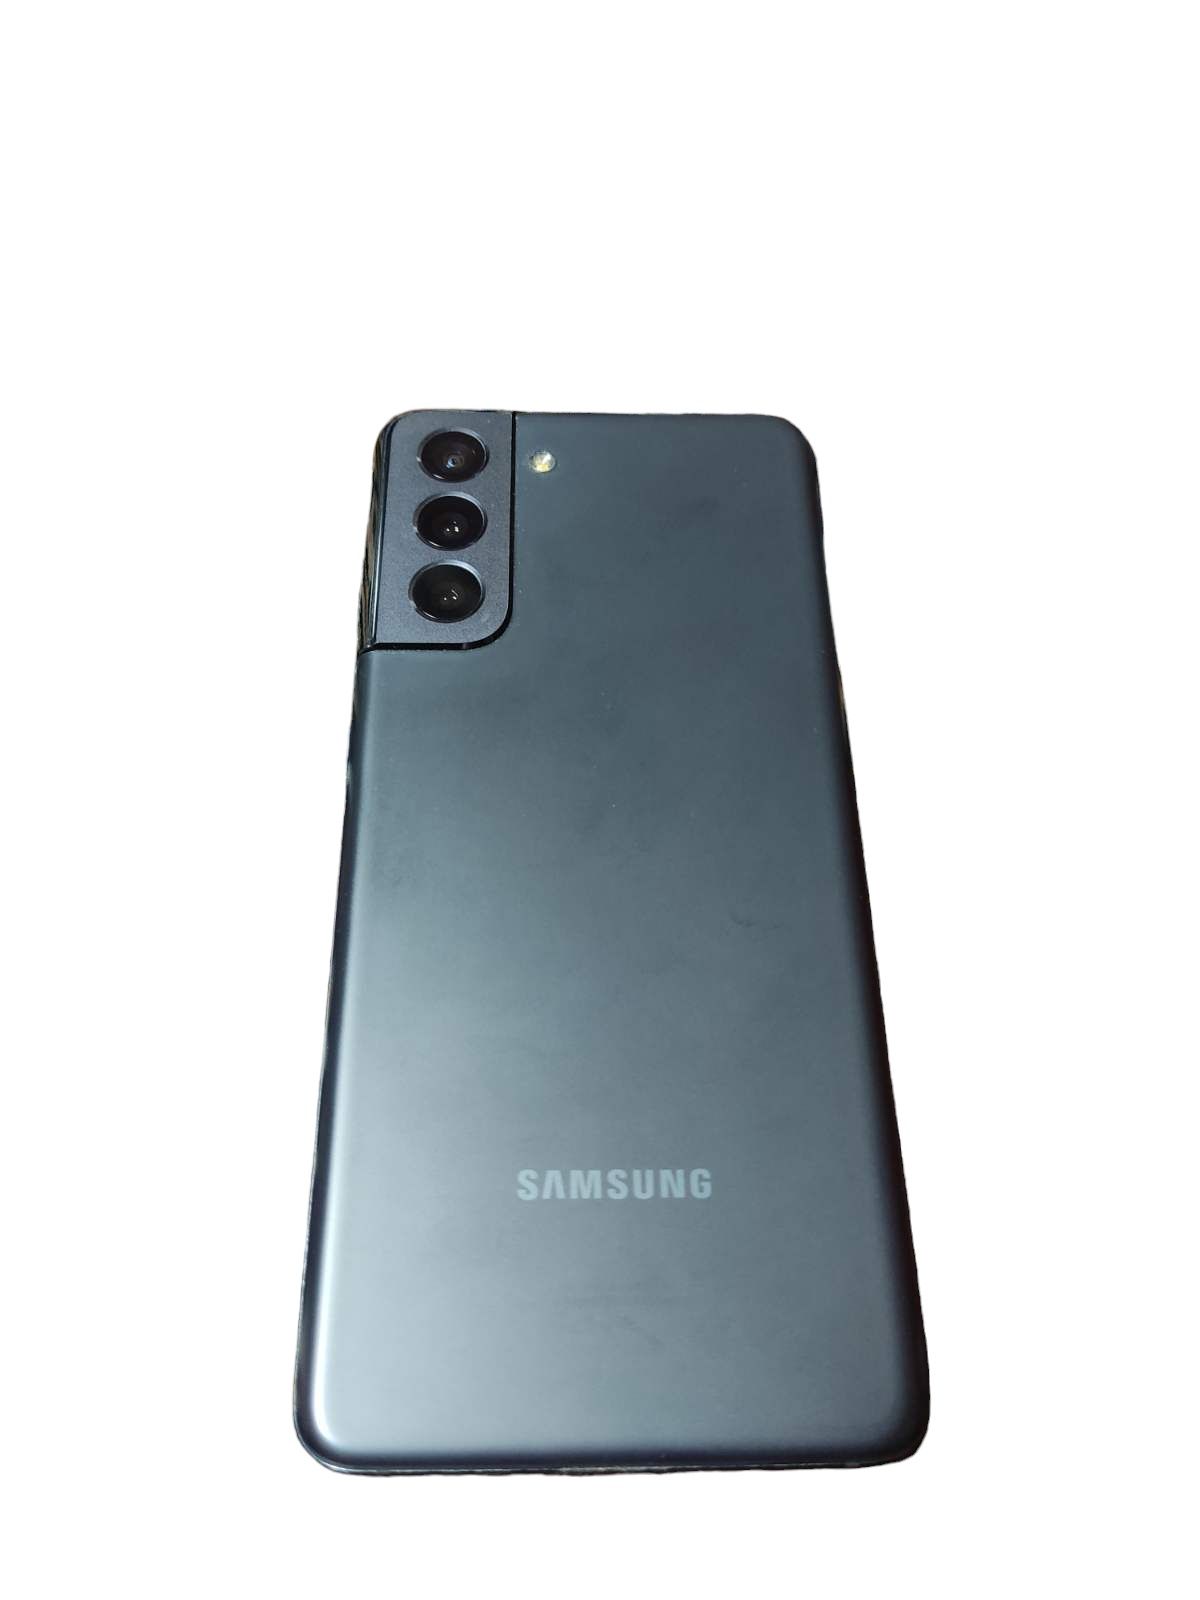 Samsung galaxy s21+ 5g snapdragon 888 5g